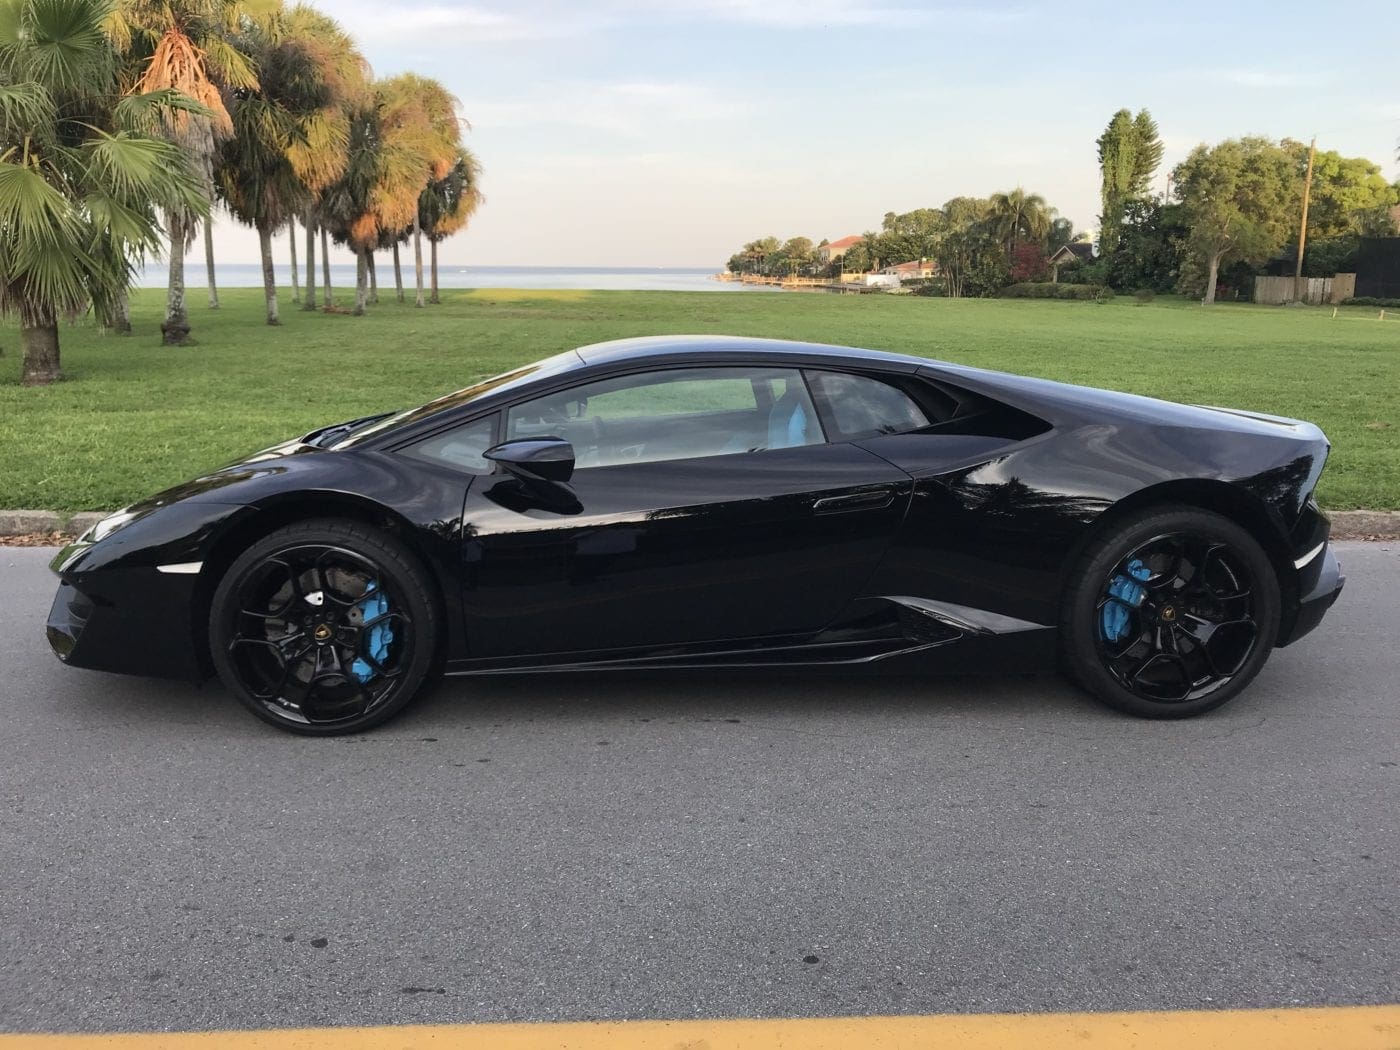 Stunning Black and Blue Lamborghini Huracan For Sale